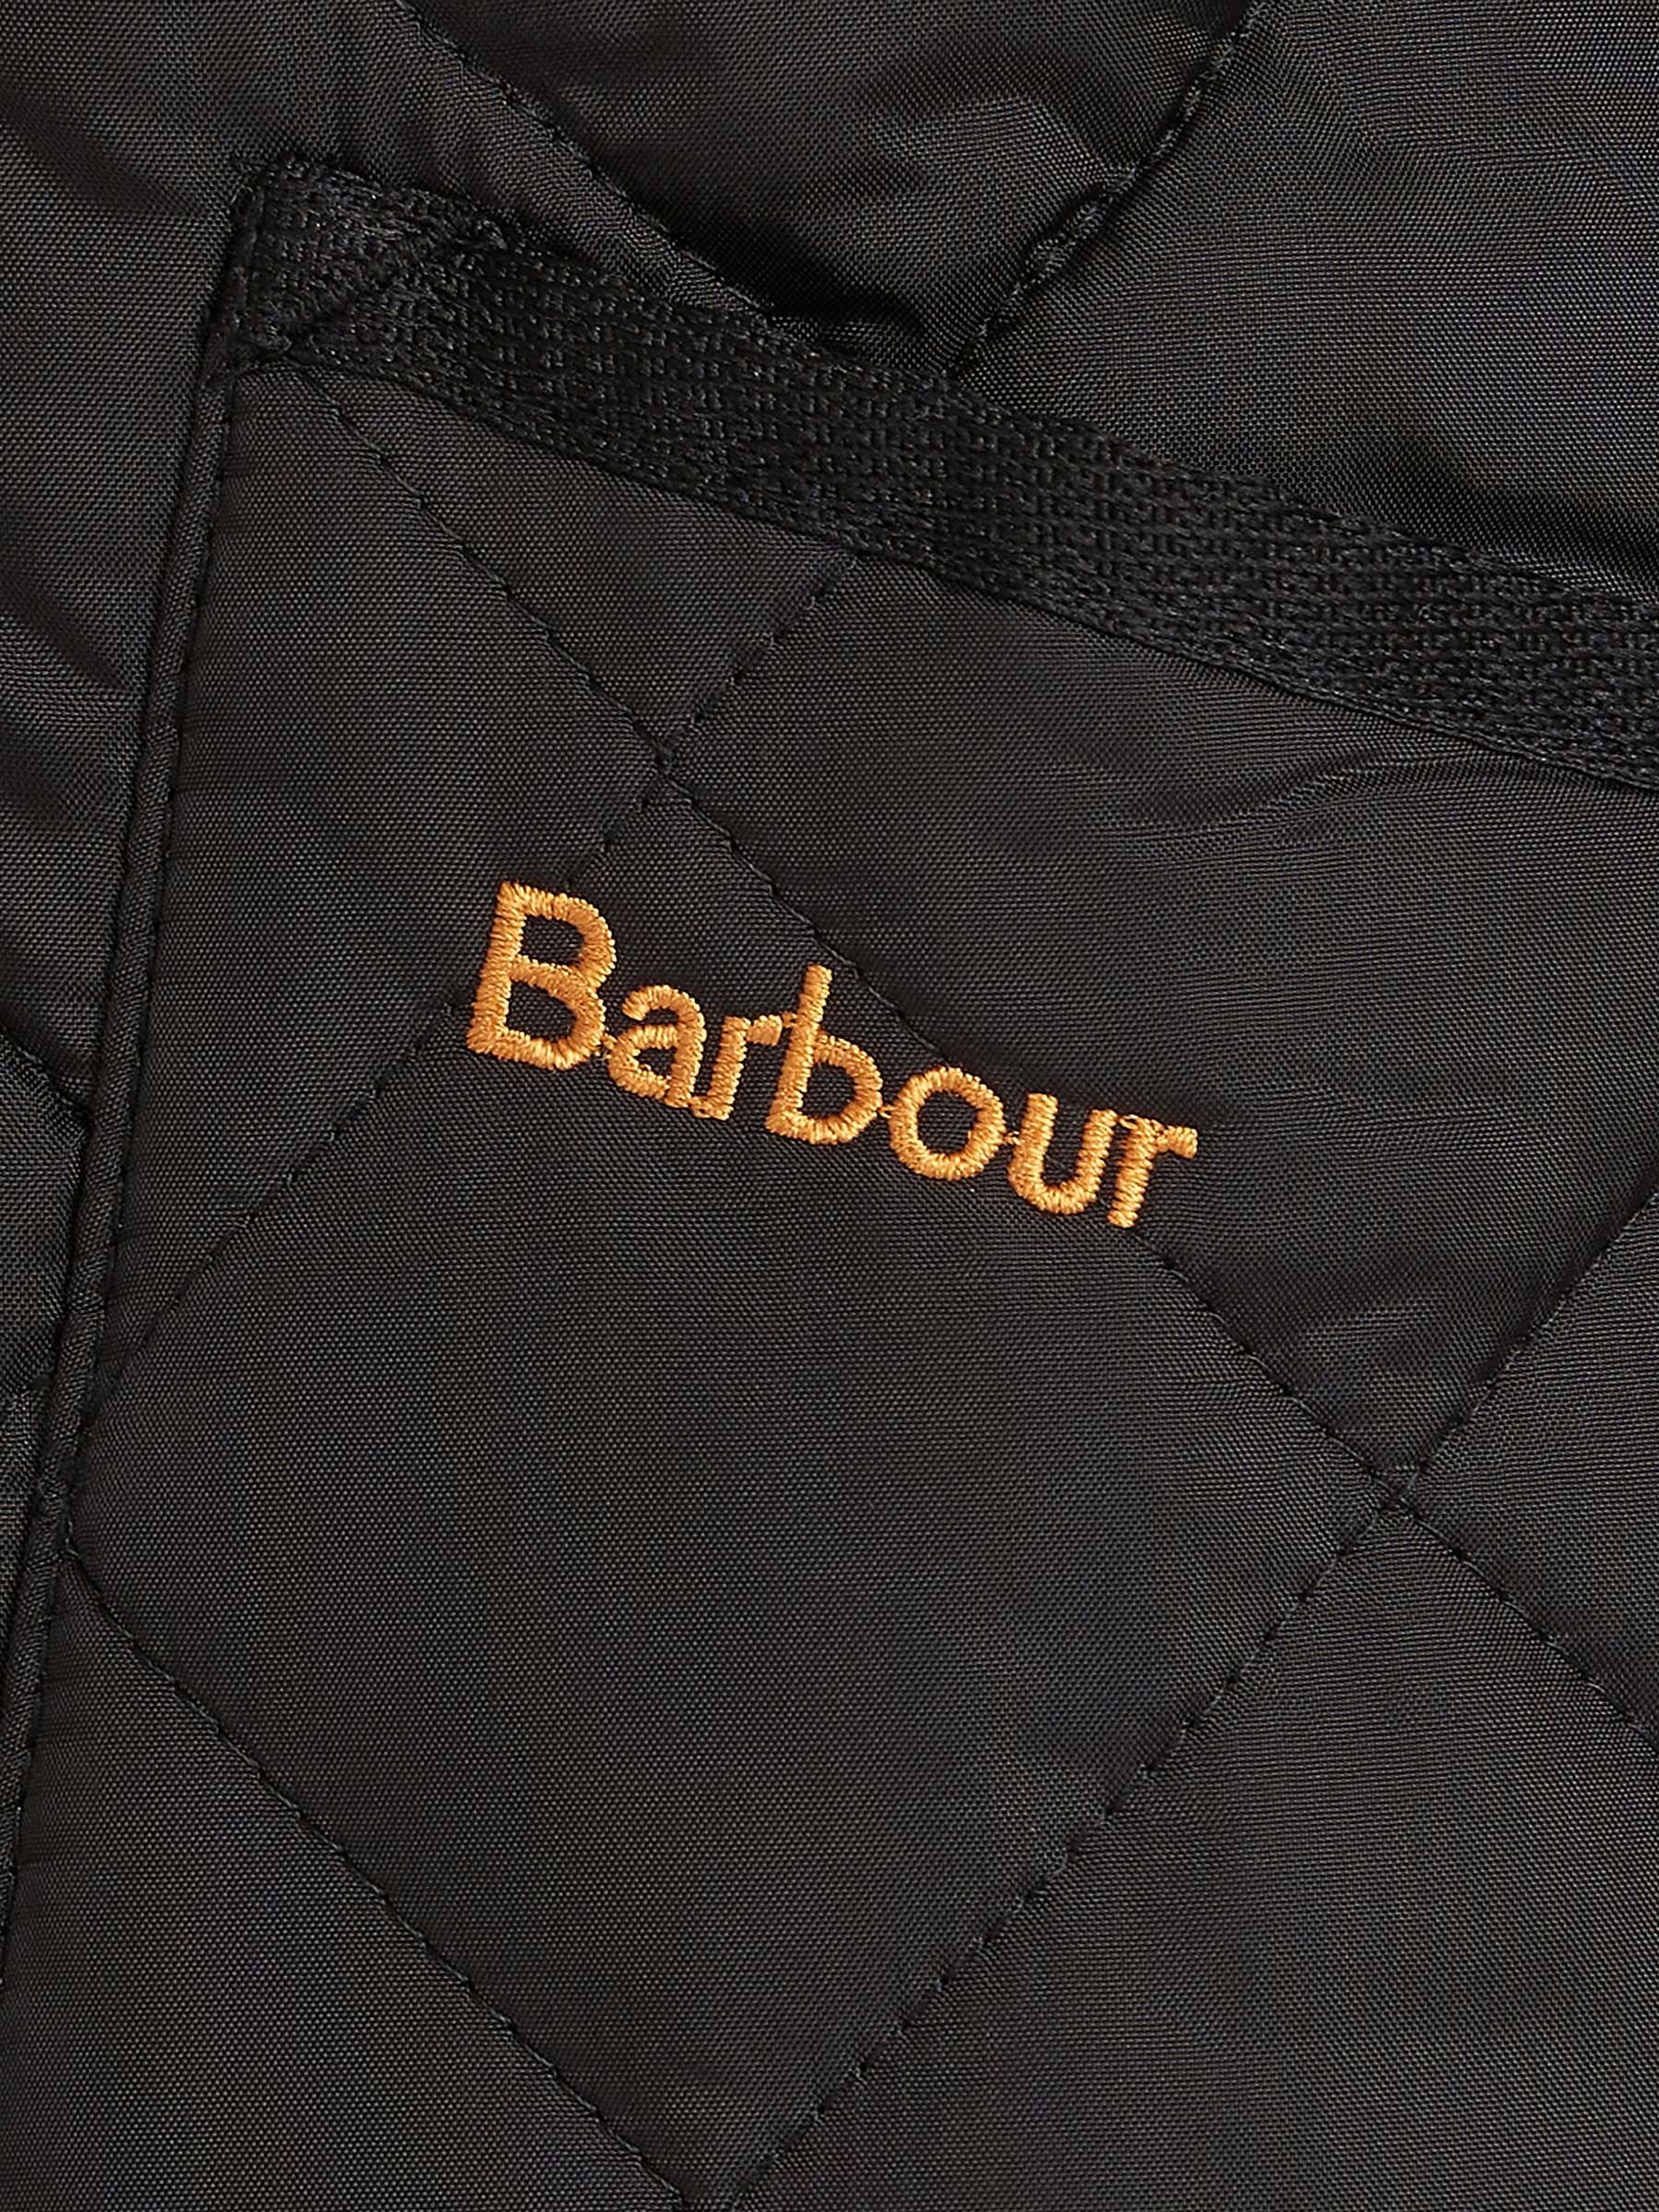 Barbour Heritage Liddesdale Quilted Jacket, Black at John Lewis & Partners